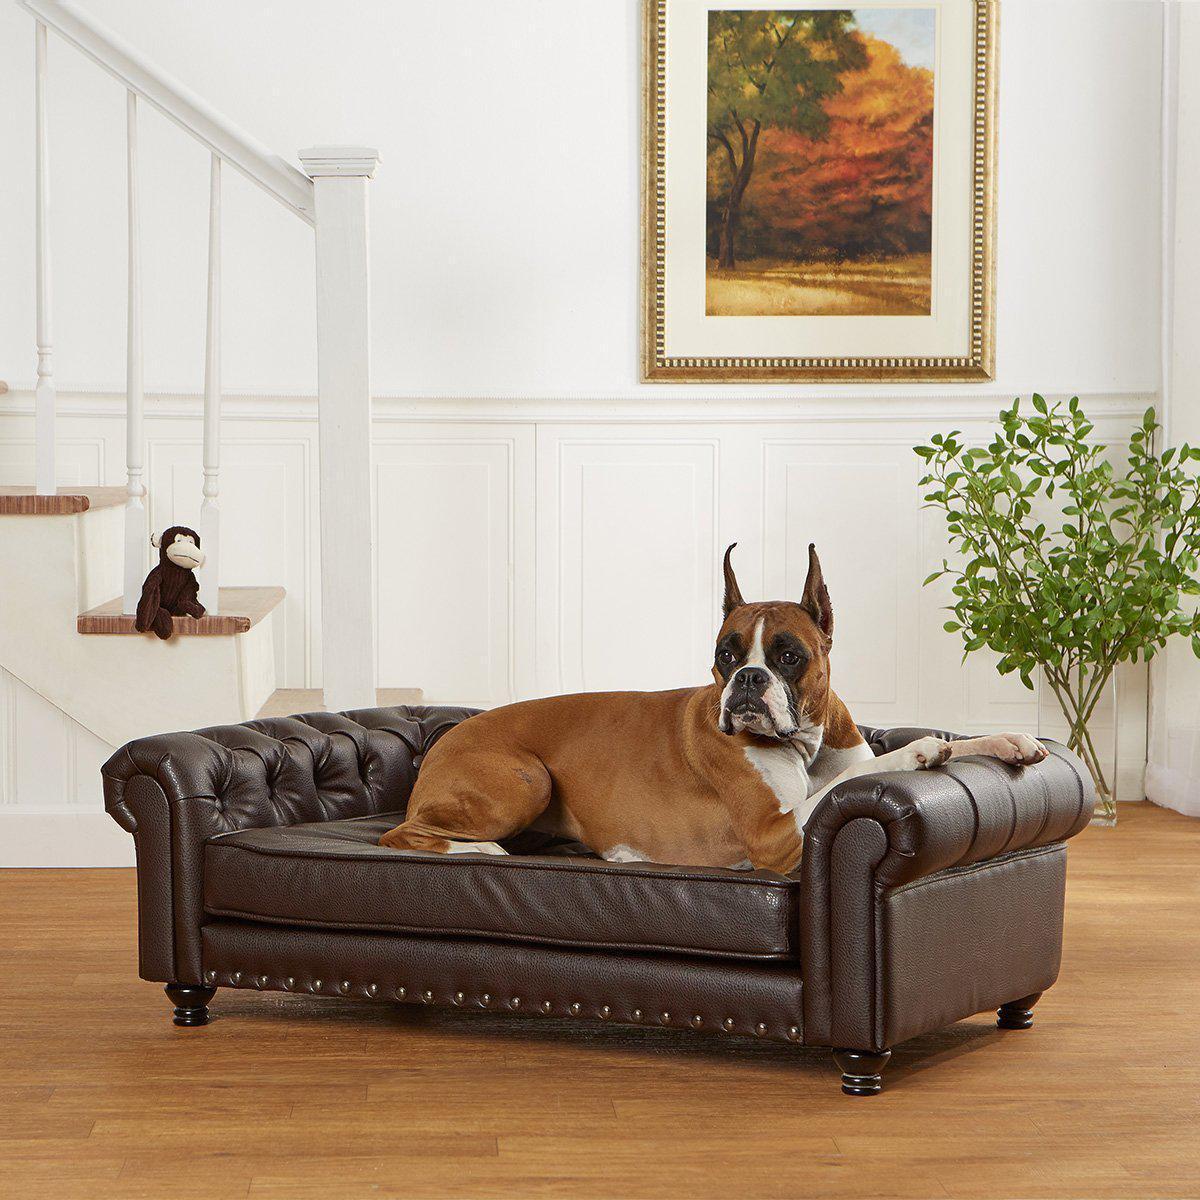 Big dog on the leather sofa